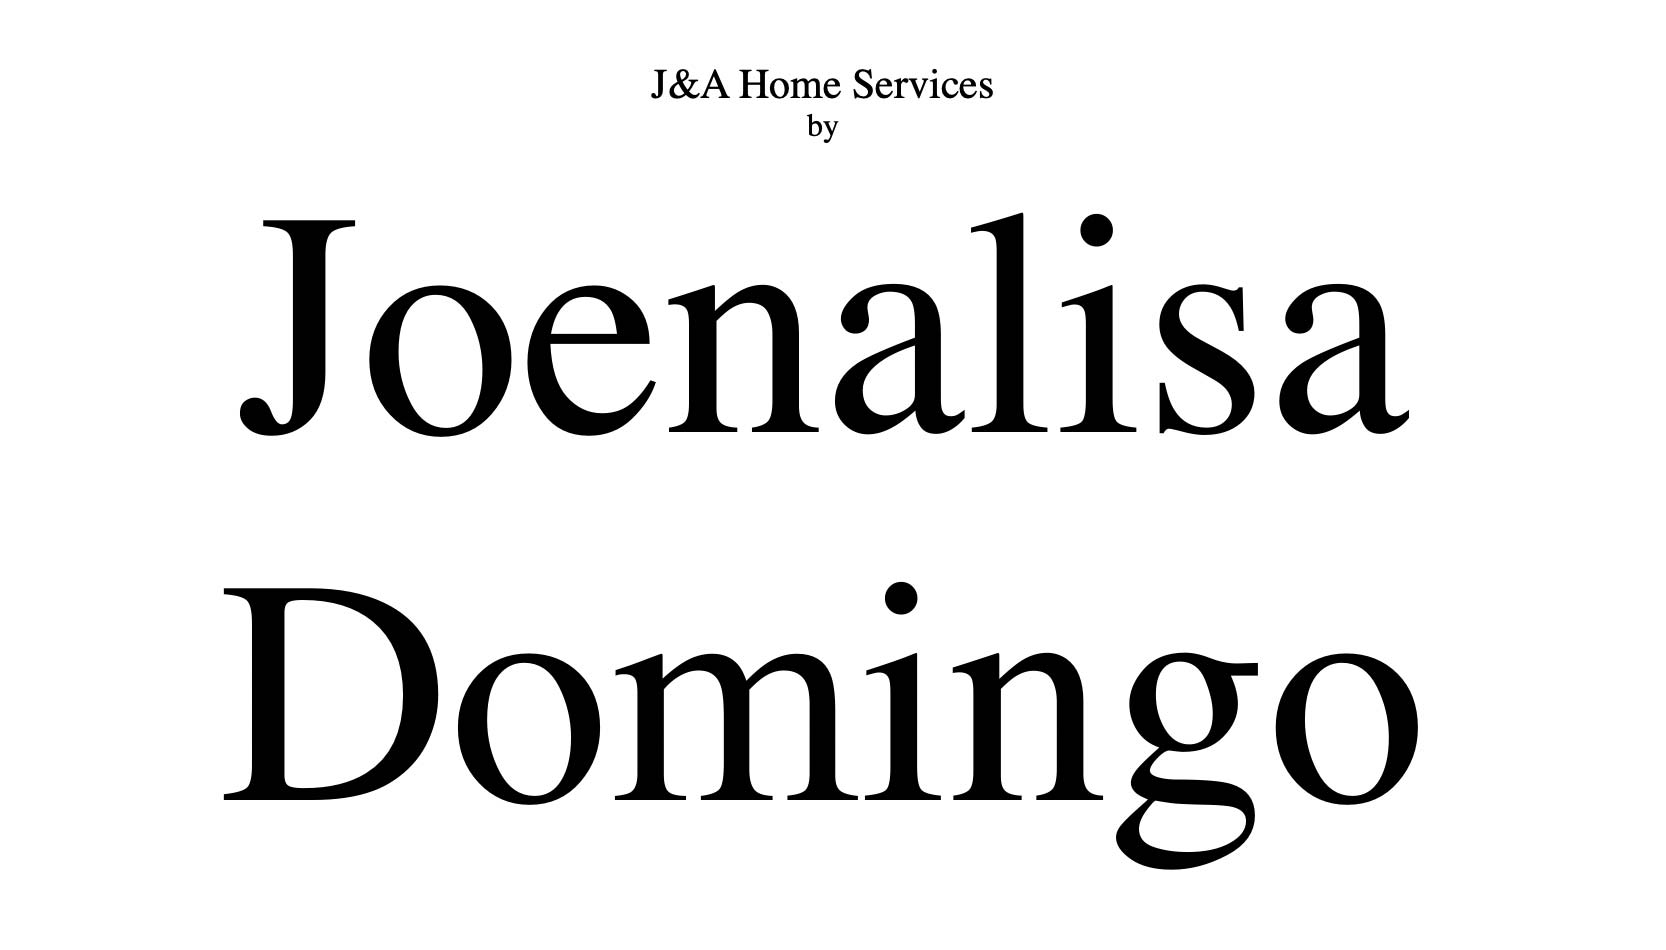 J&A Home Services